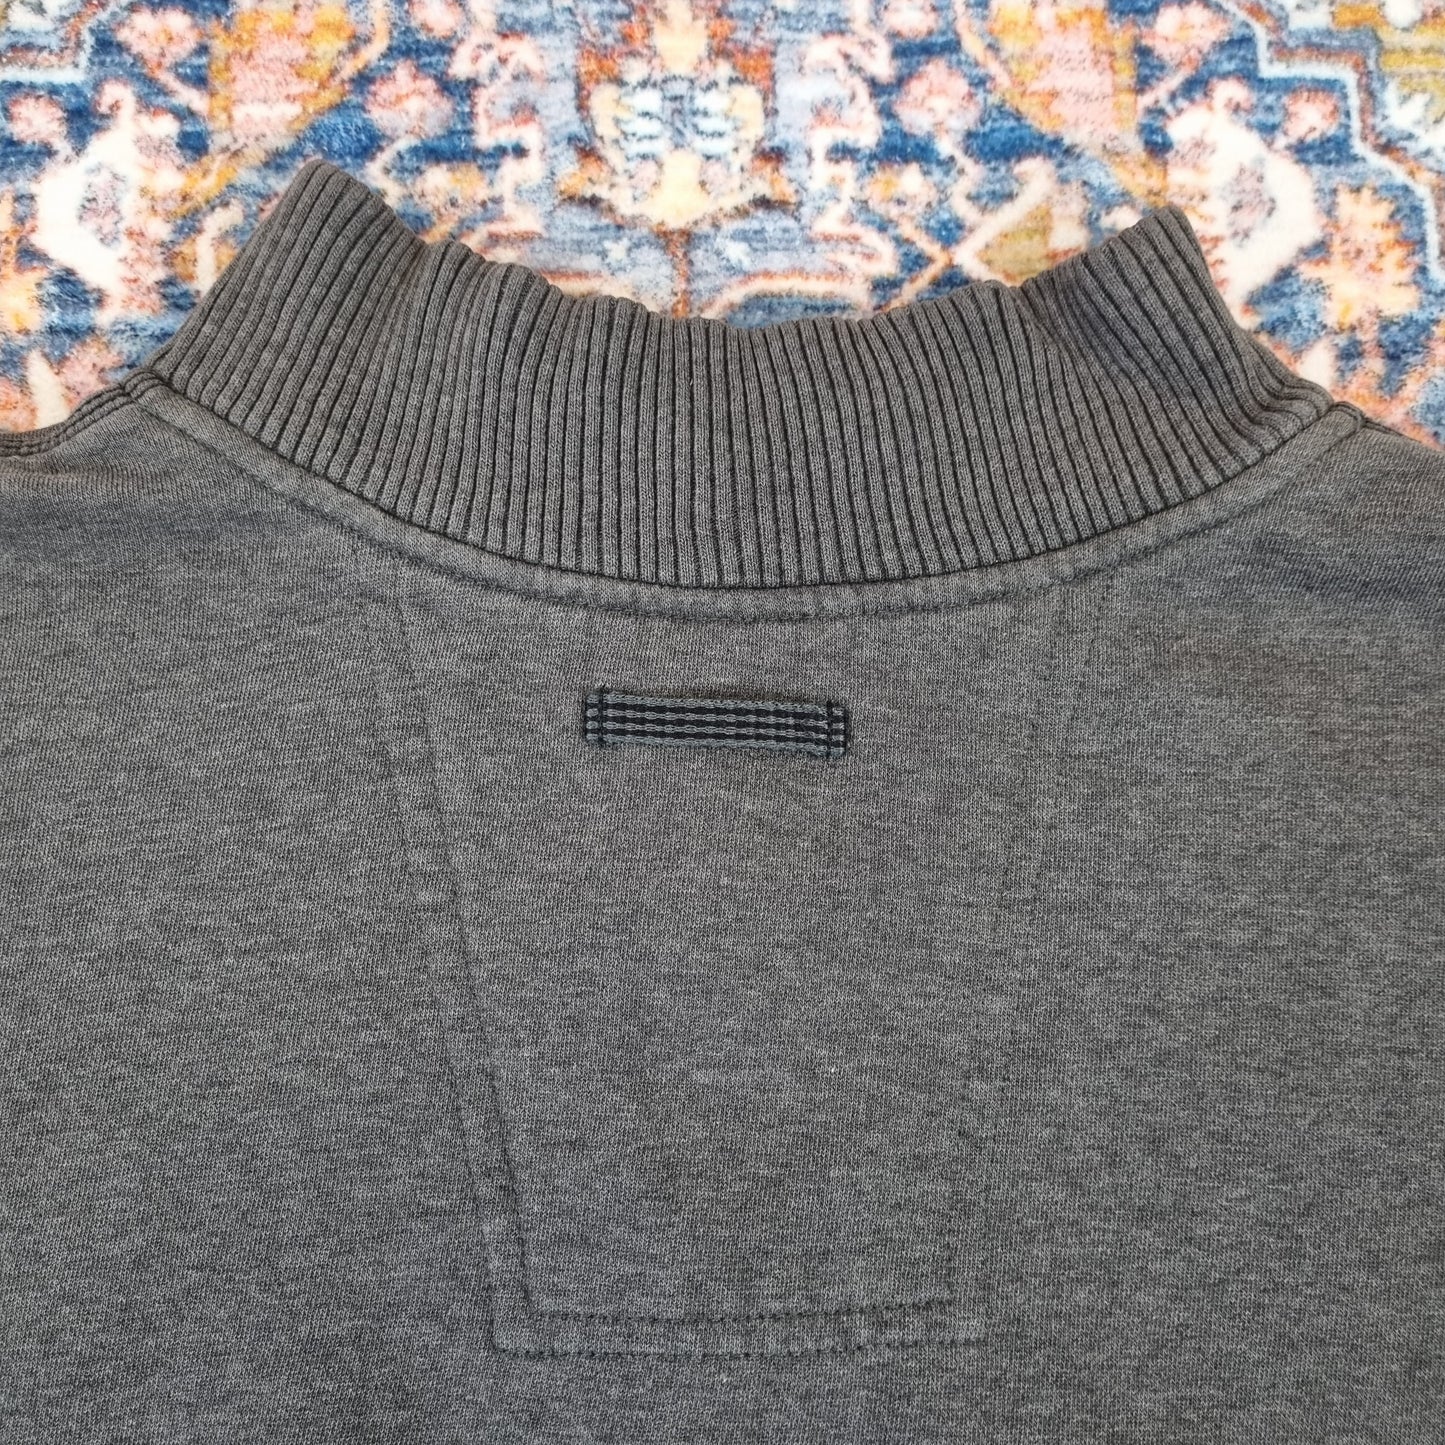 Vintage Adidas Equipment Sweatshirt (XL - 2XL)